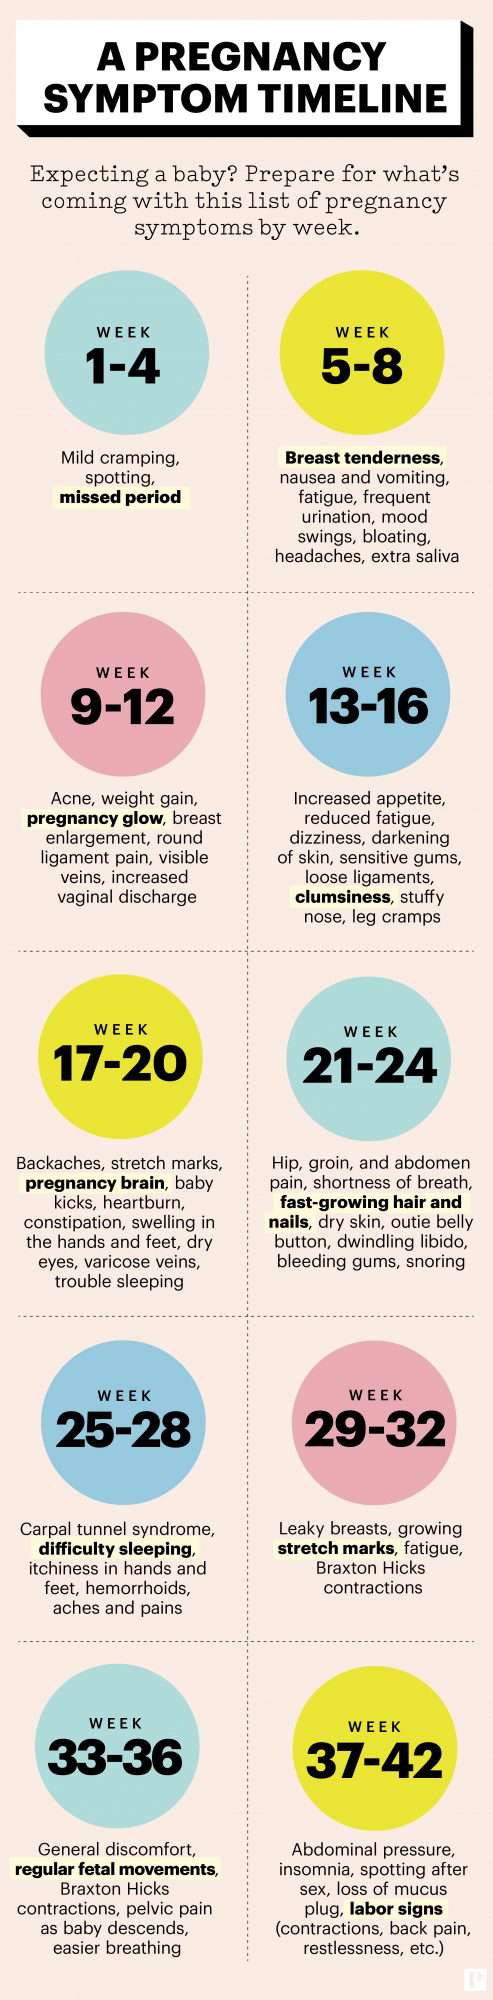 pregnancy symptom timeline by week